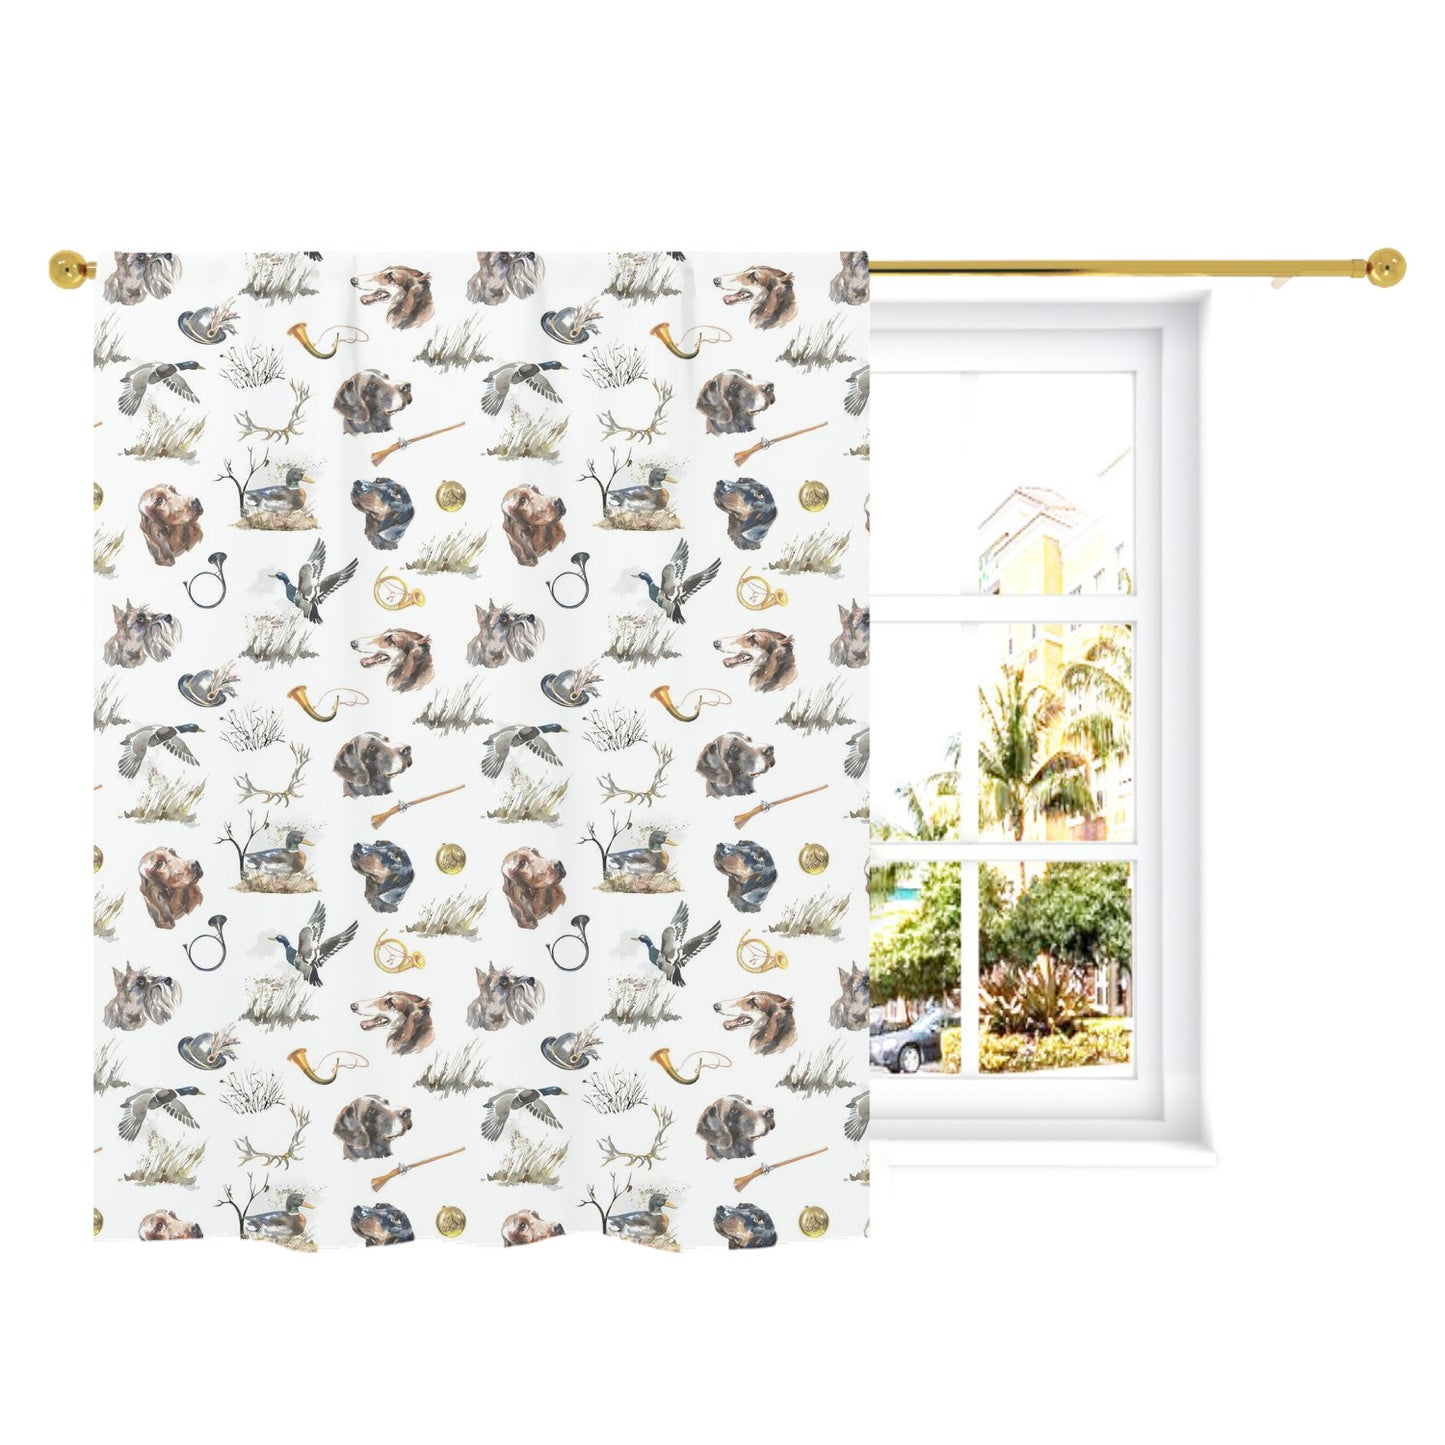 Ducks and Dogs Hunting Curtain, Single Panel, Hunting Nursey Decor - Hunter